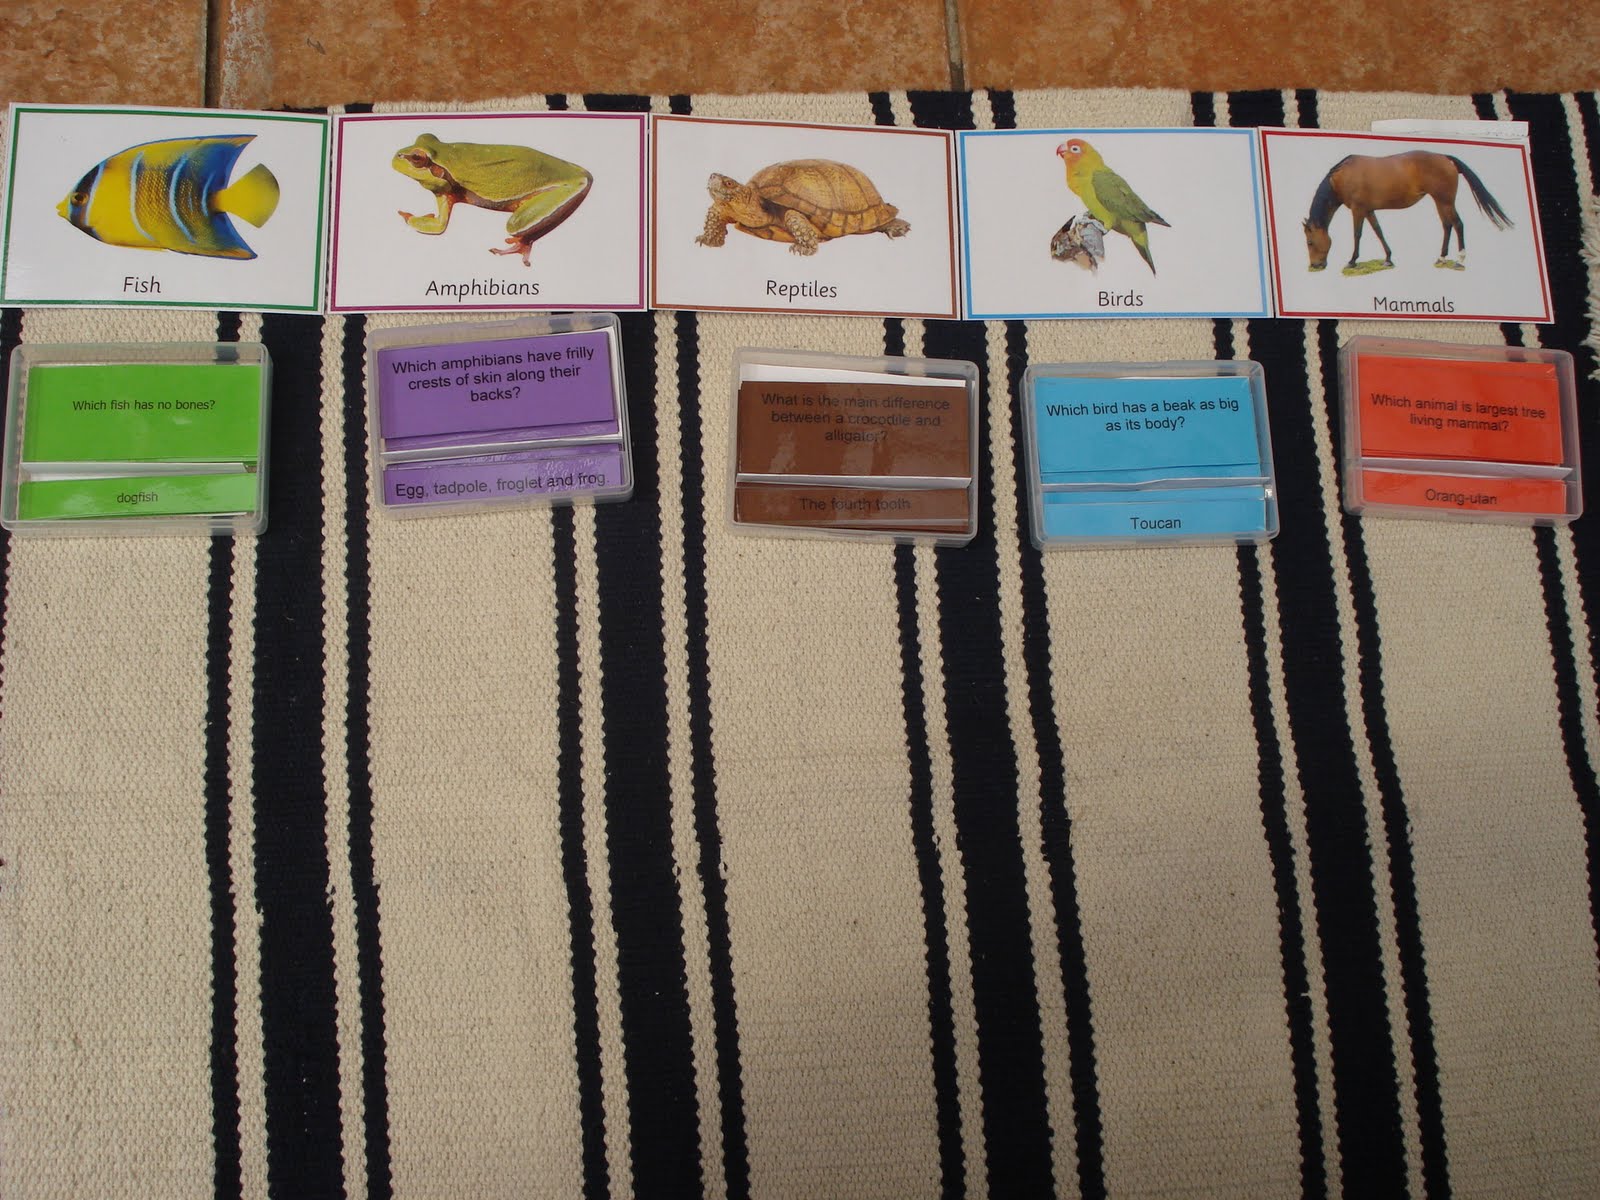 THE LEARNING ARK - Elementary Montessori : Animal kingdom Questions